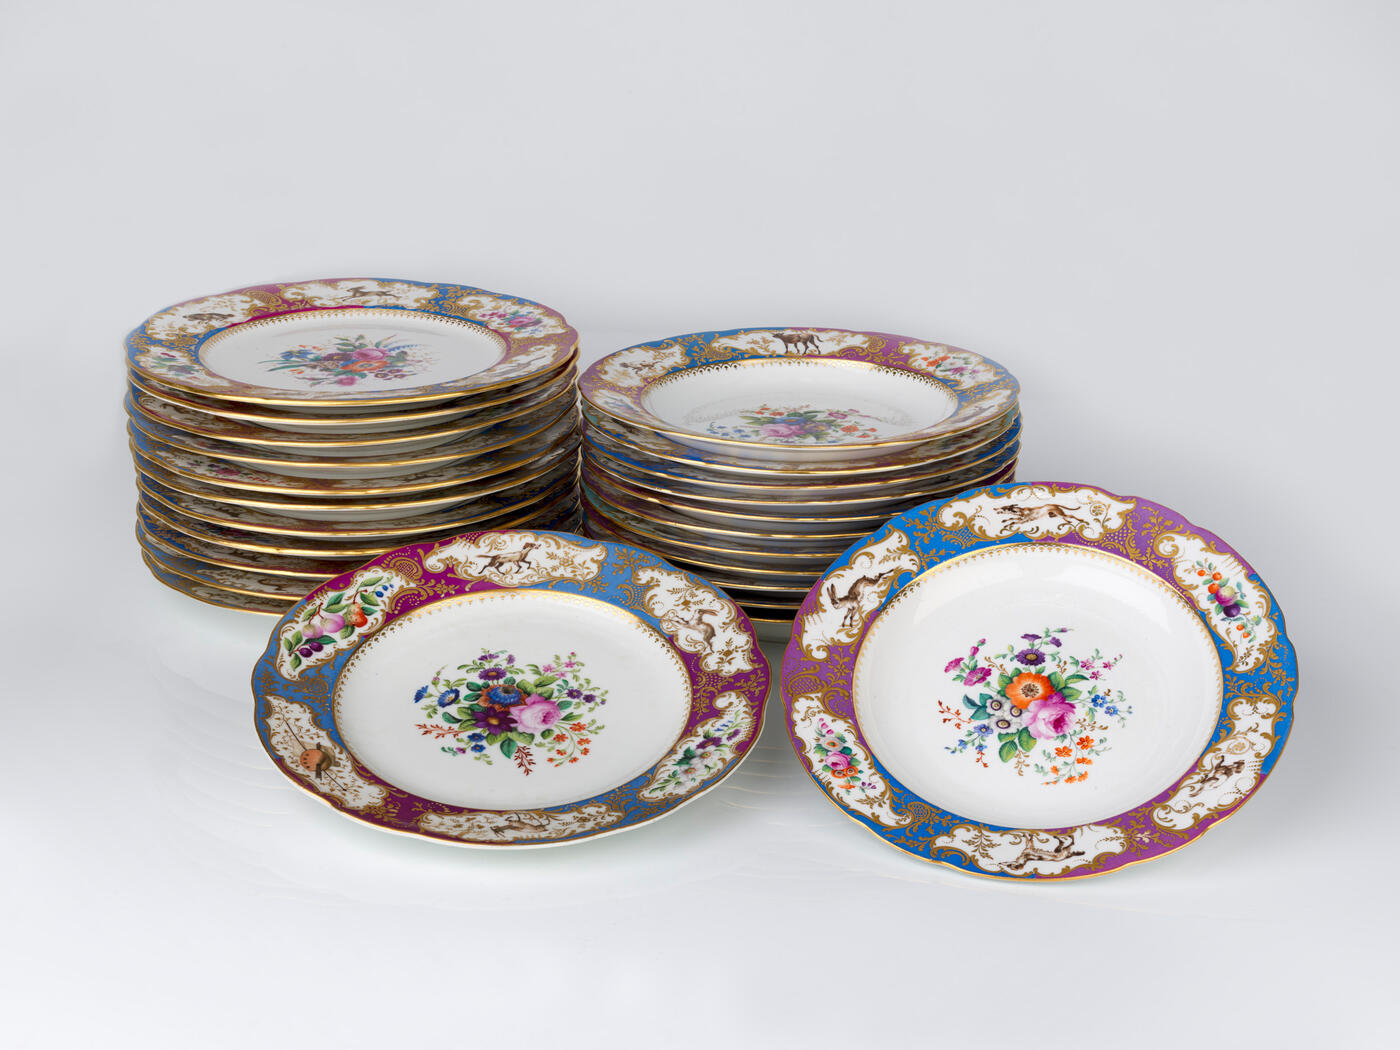 A Set of Twelve Soup Plates from the Grand Duke Mikhail Pavlovich Service